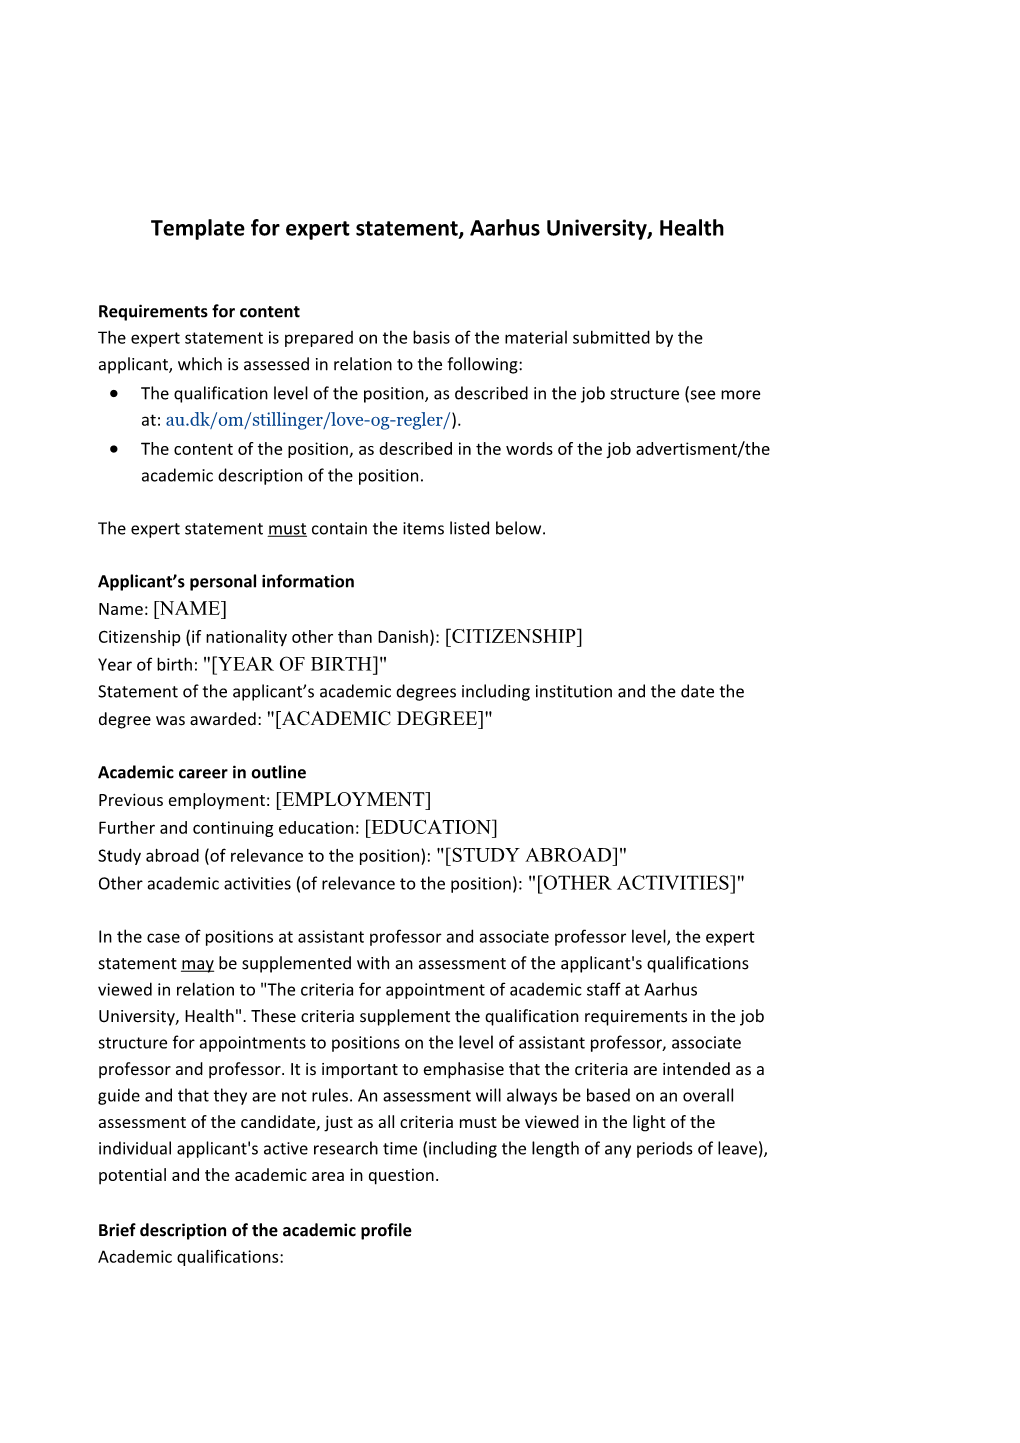 Template for Expert Statement, Aarhus University, Health